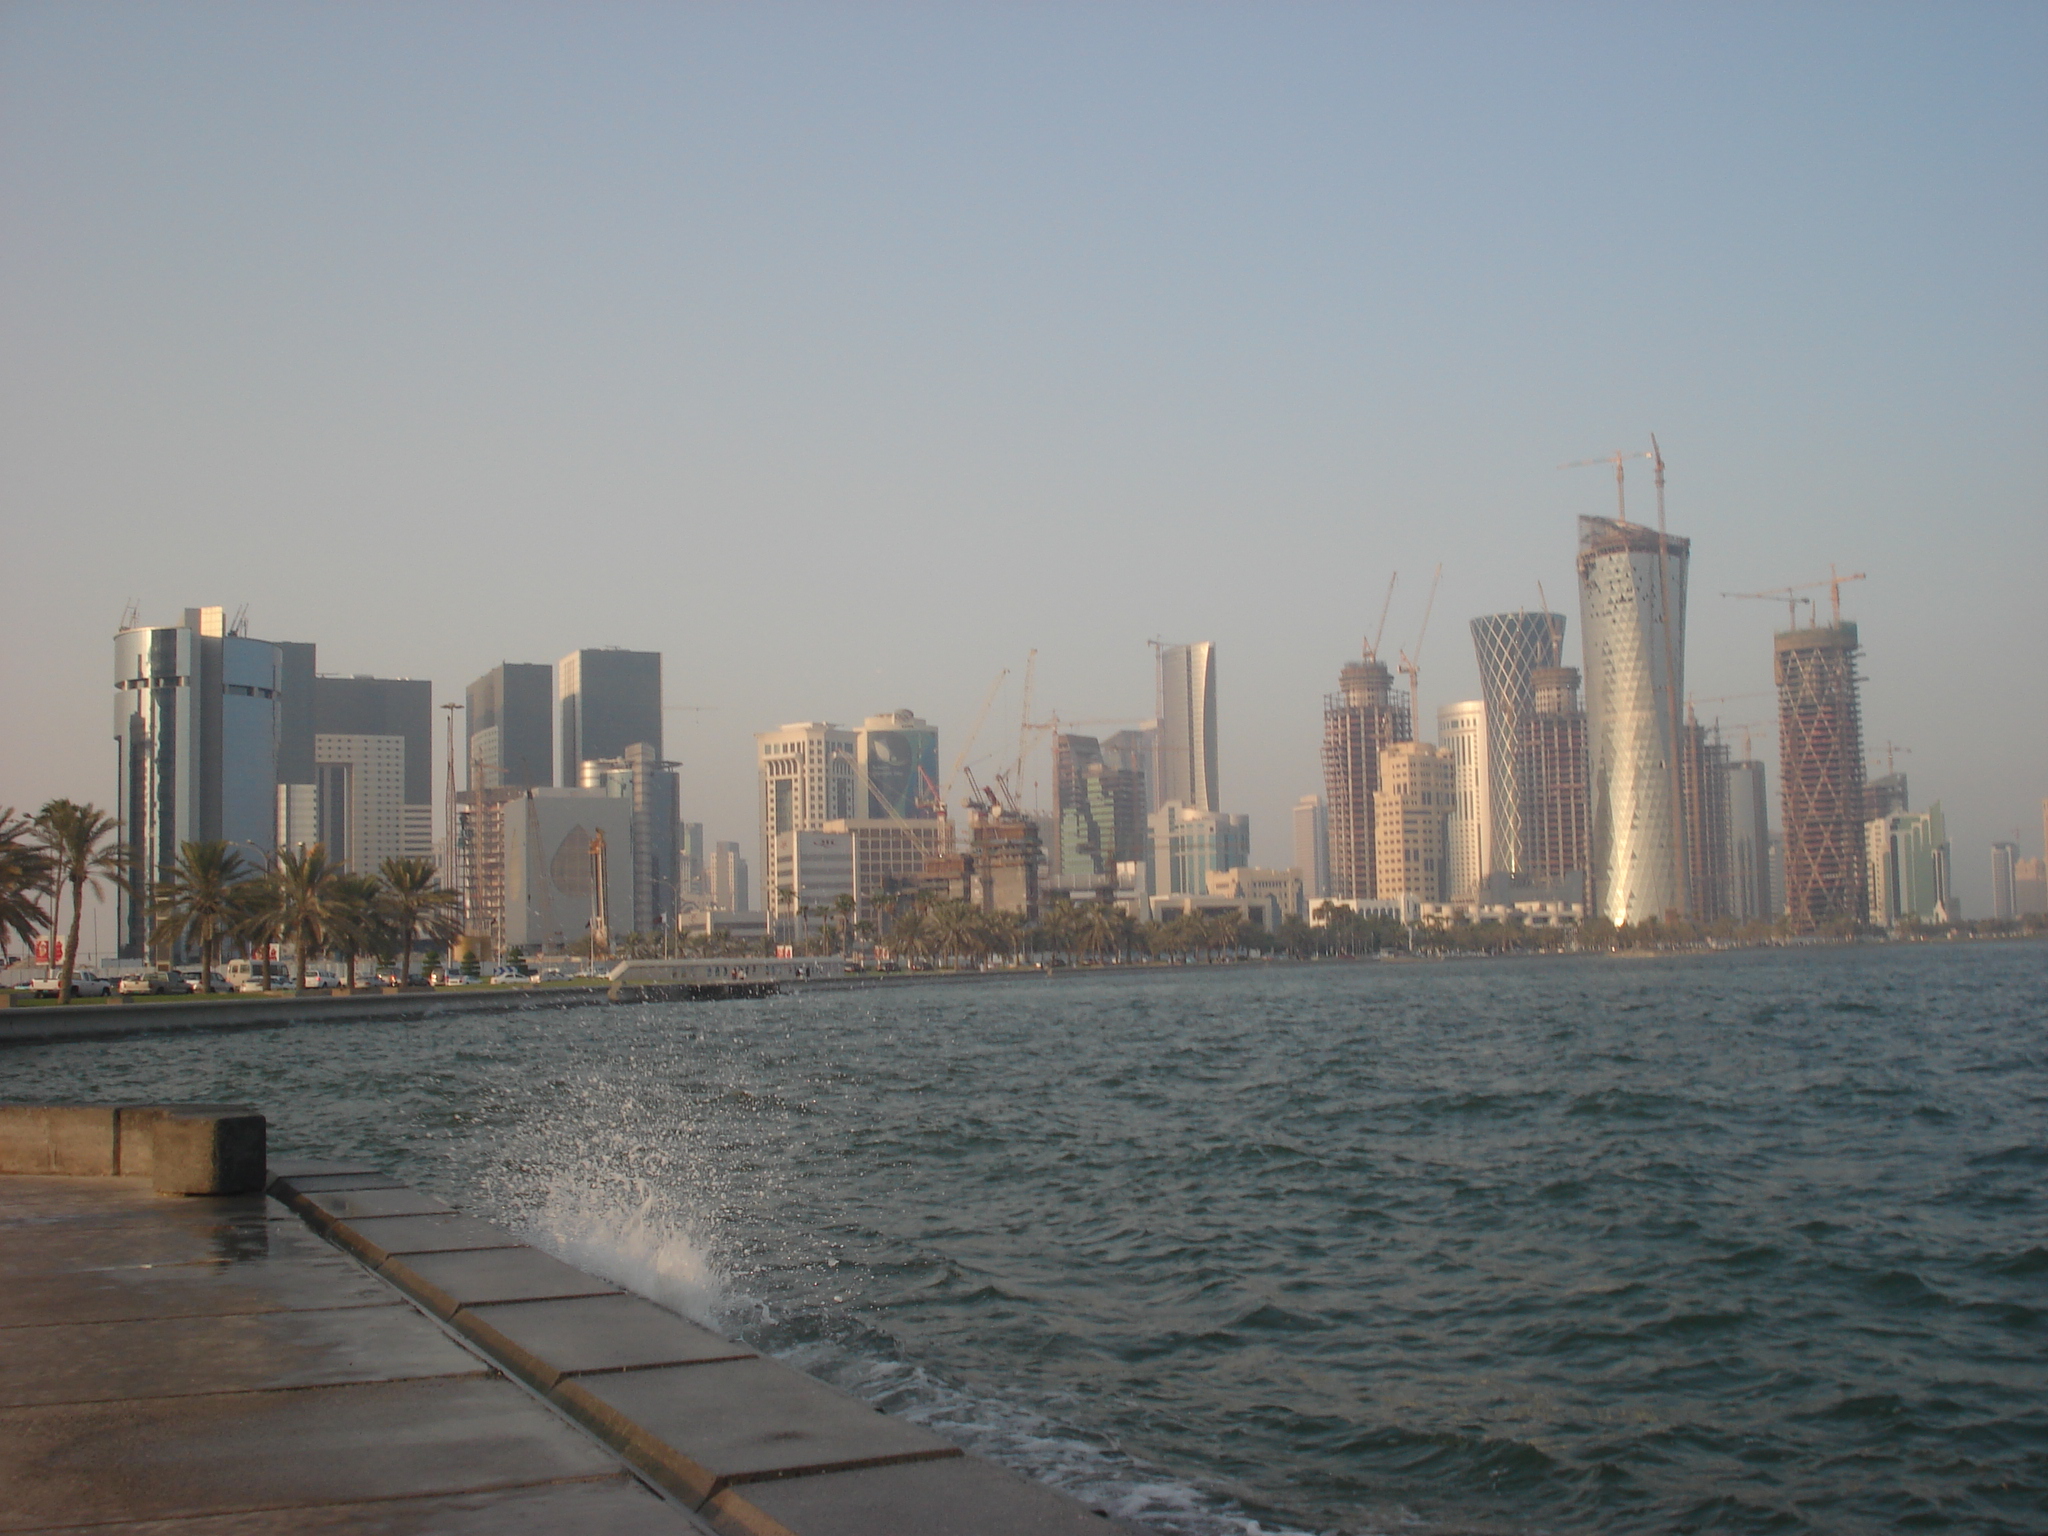 Doha (Ad-Dawhah), capital of the Emirate of Qatar